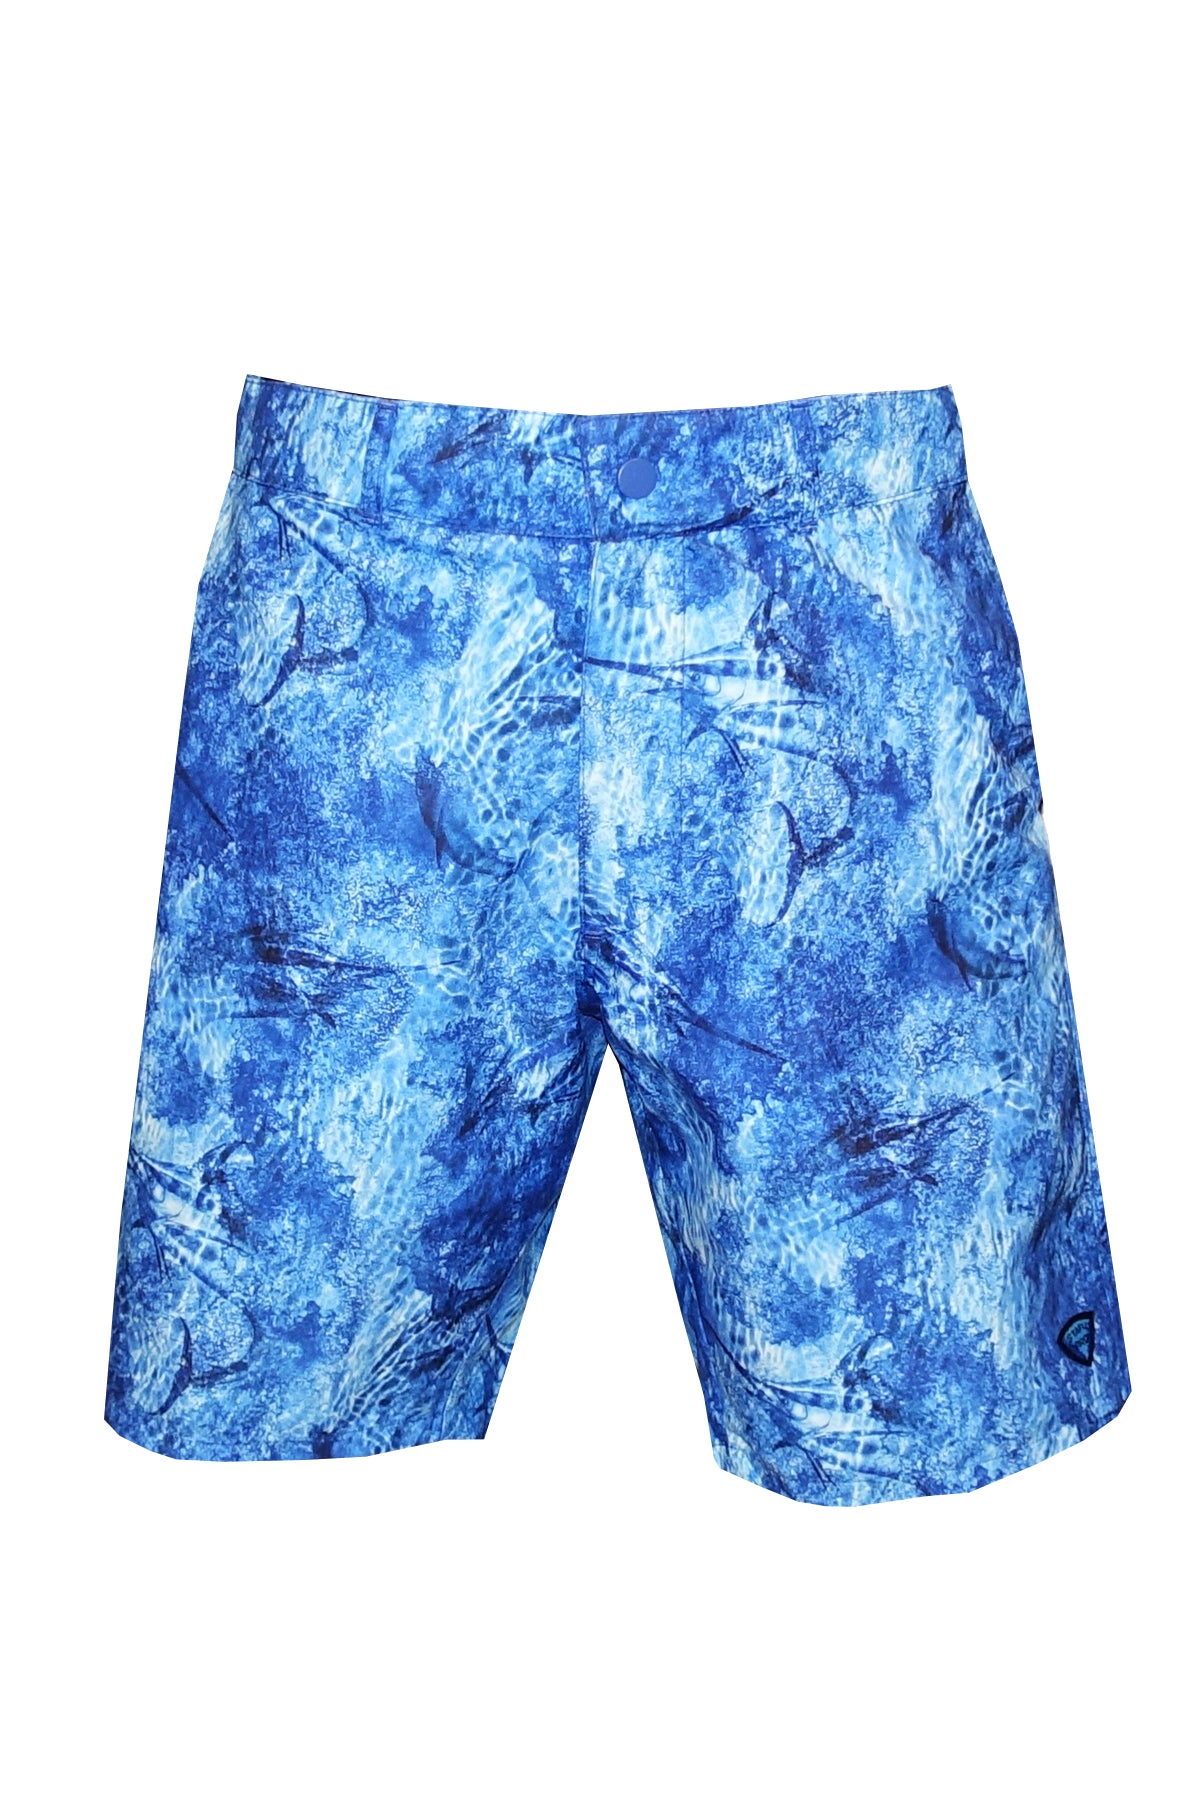 Andaman Men's Adjustable Waist Fisherman Sailor Marlin Mania Patterned Blue Short